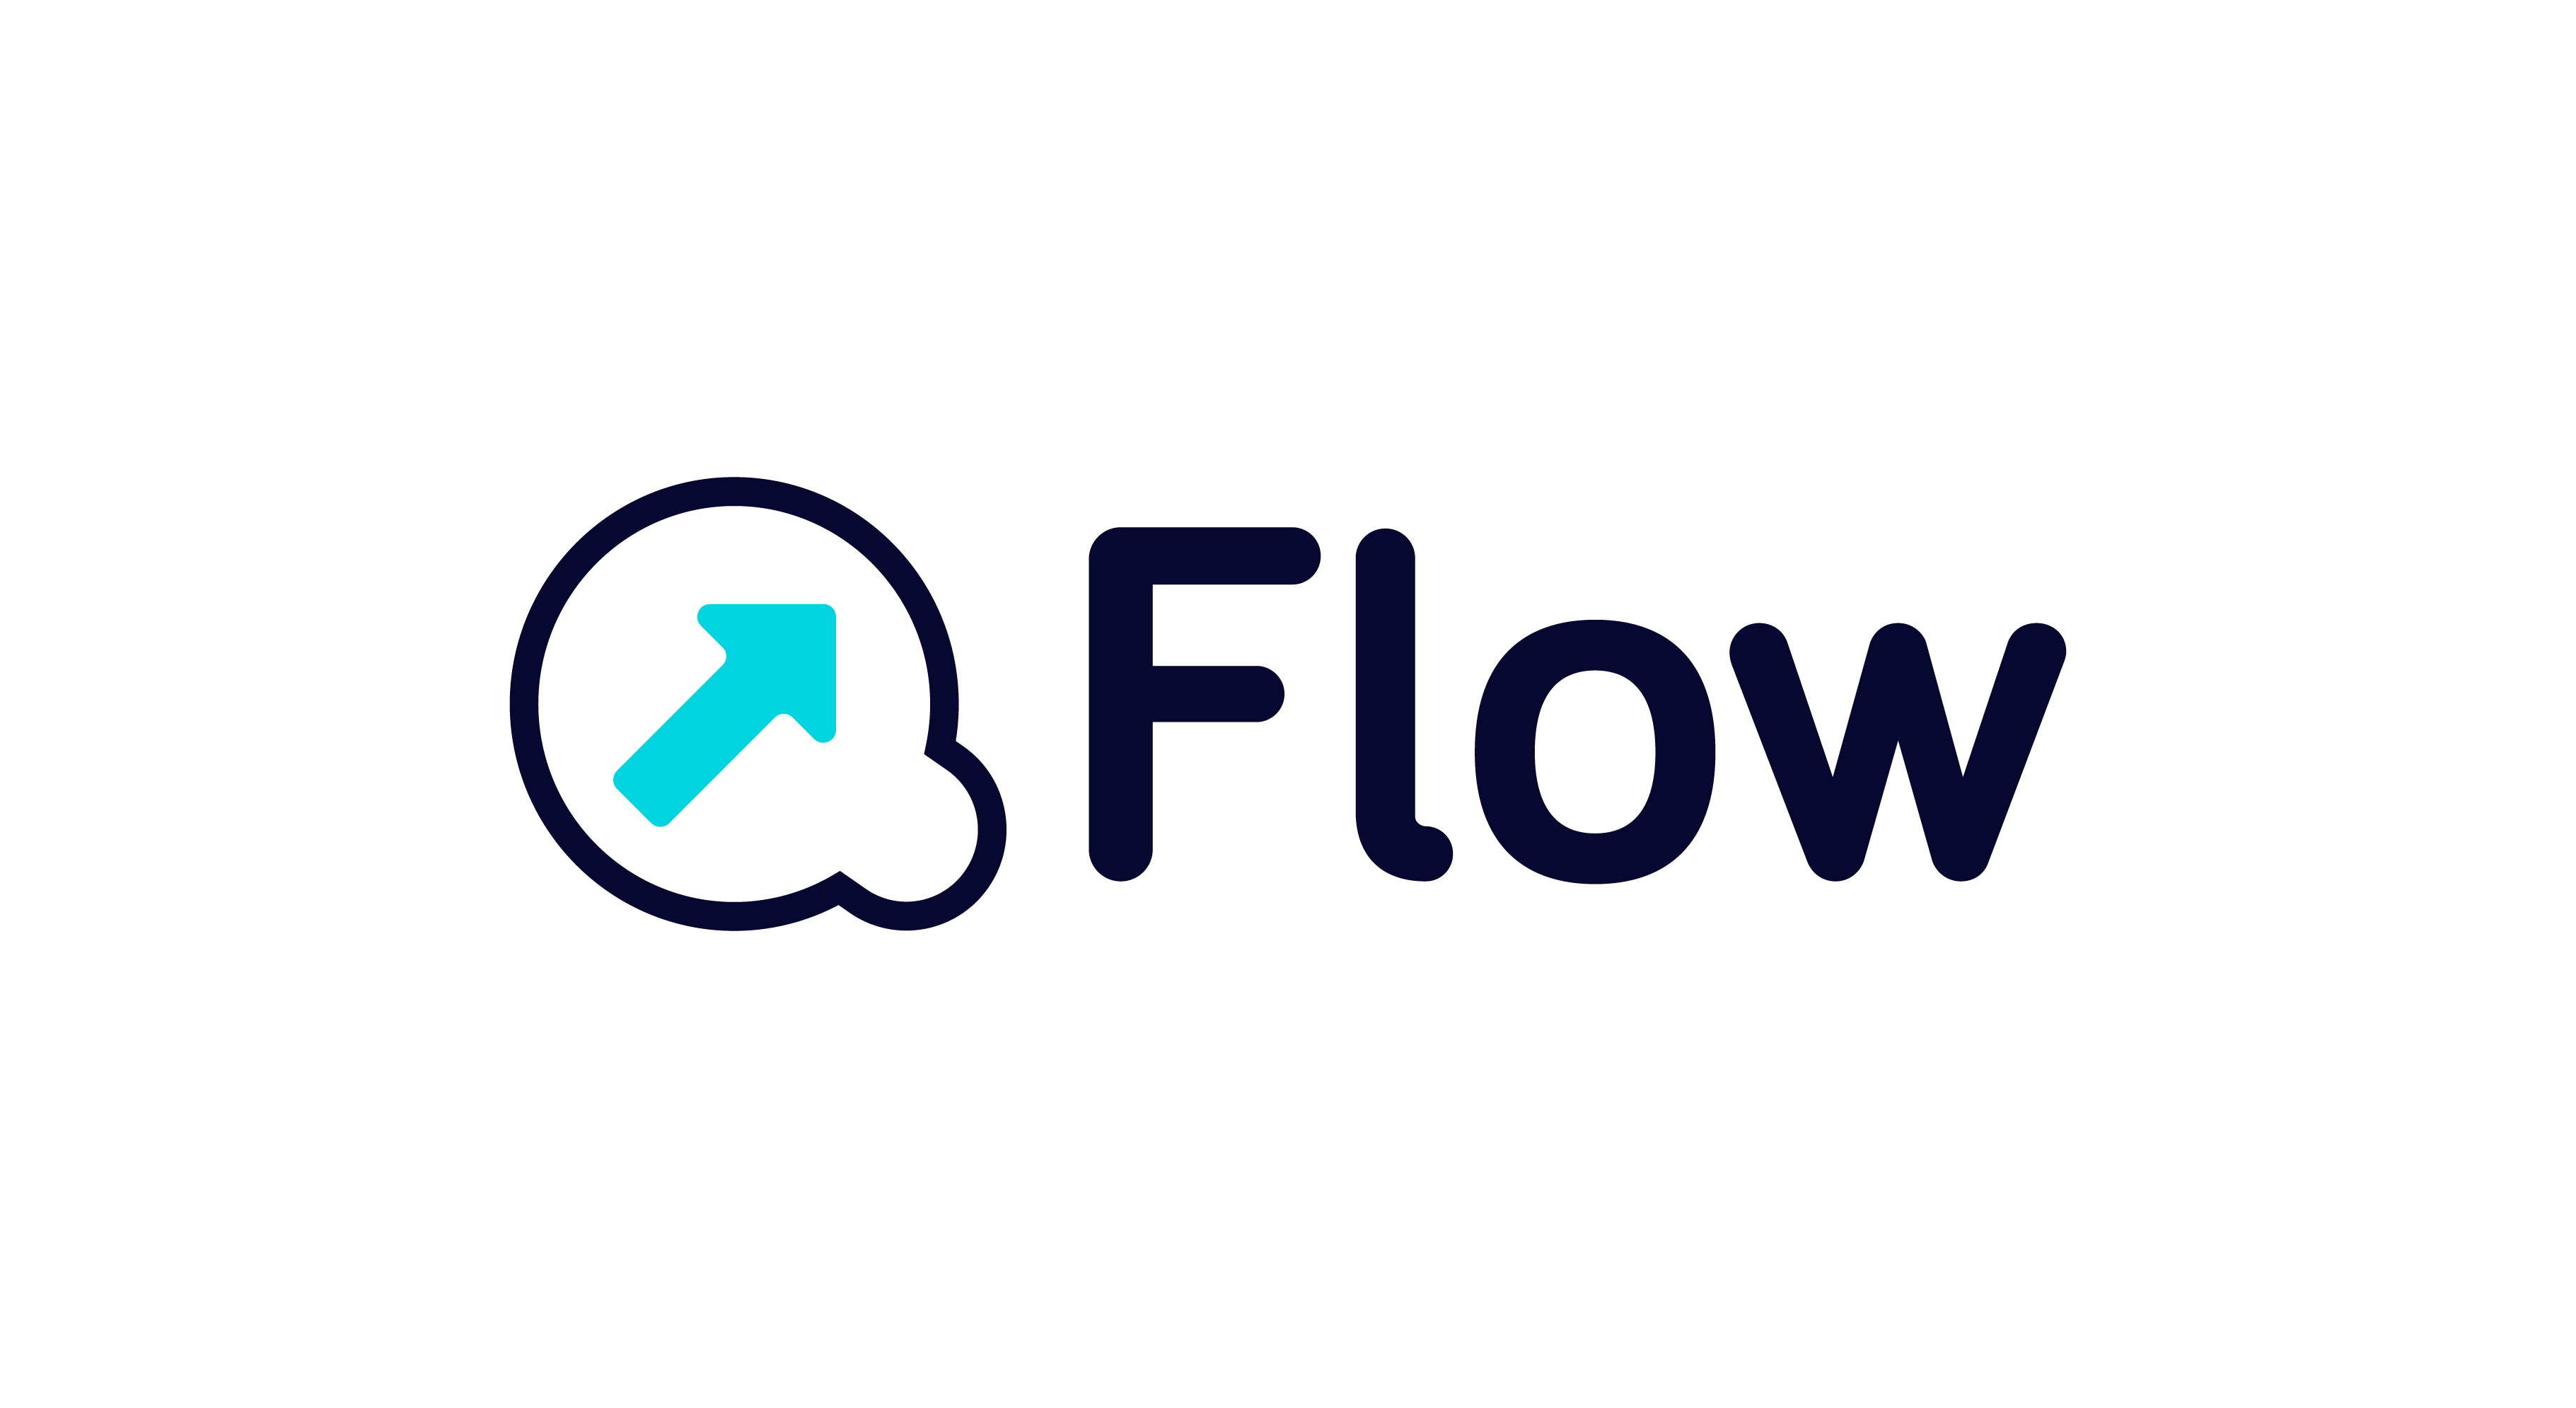 softpoint qflow logo black